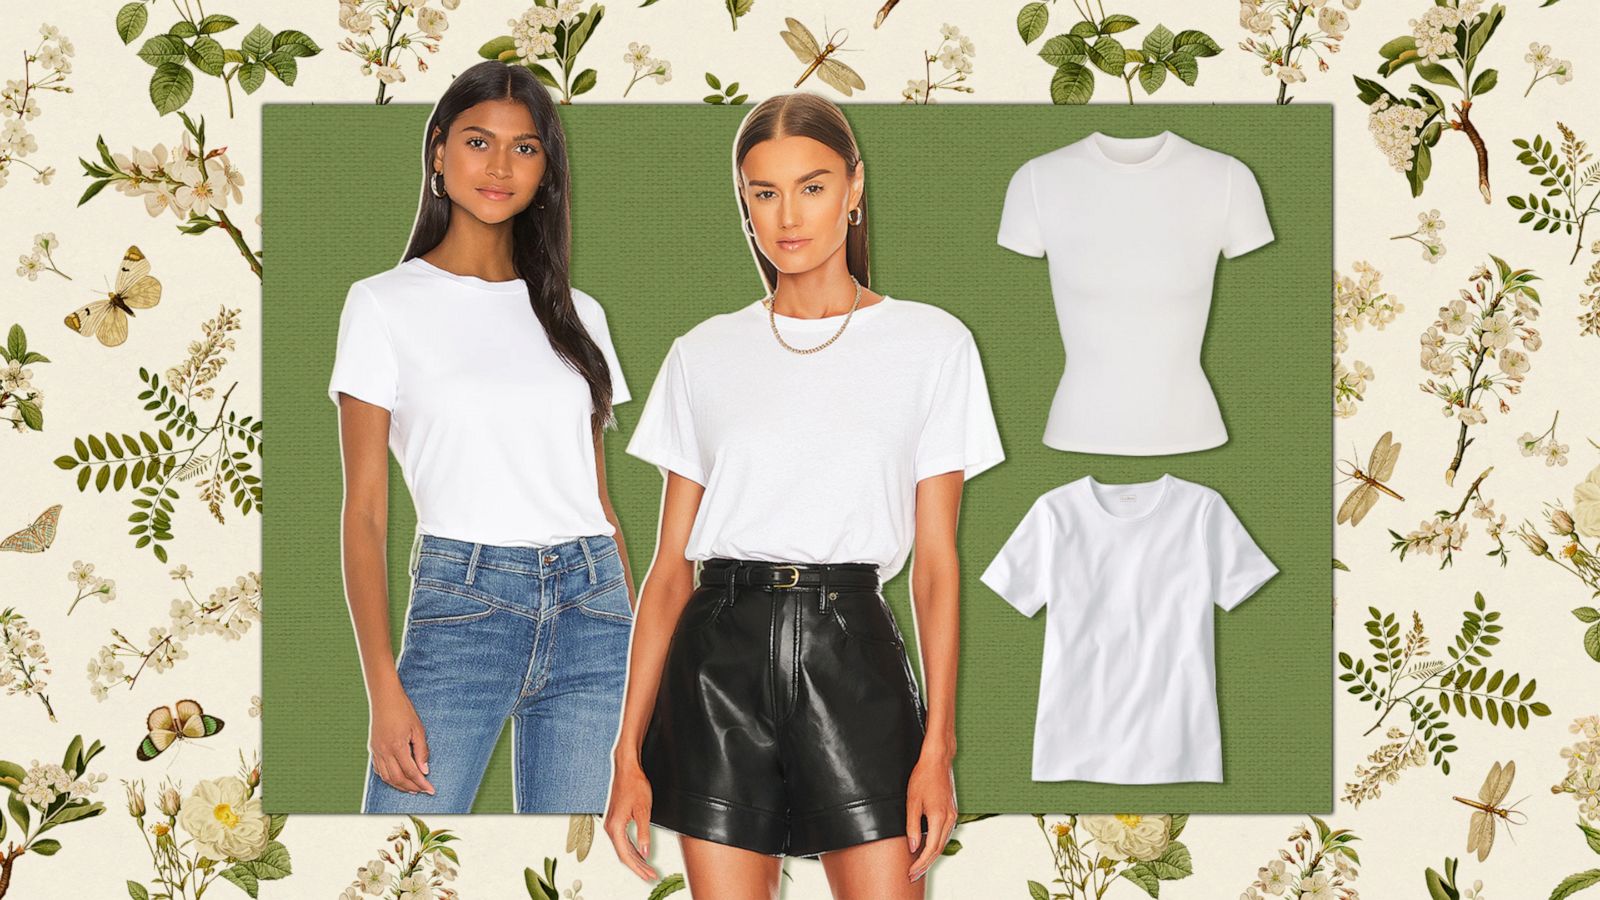 Louis Vuitton LV short sleeve tshirts cotton tees shirts t-shirt womens  tops summer clothes